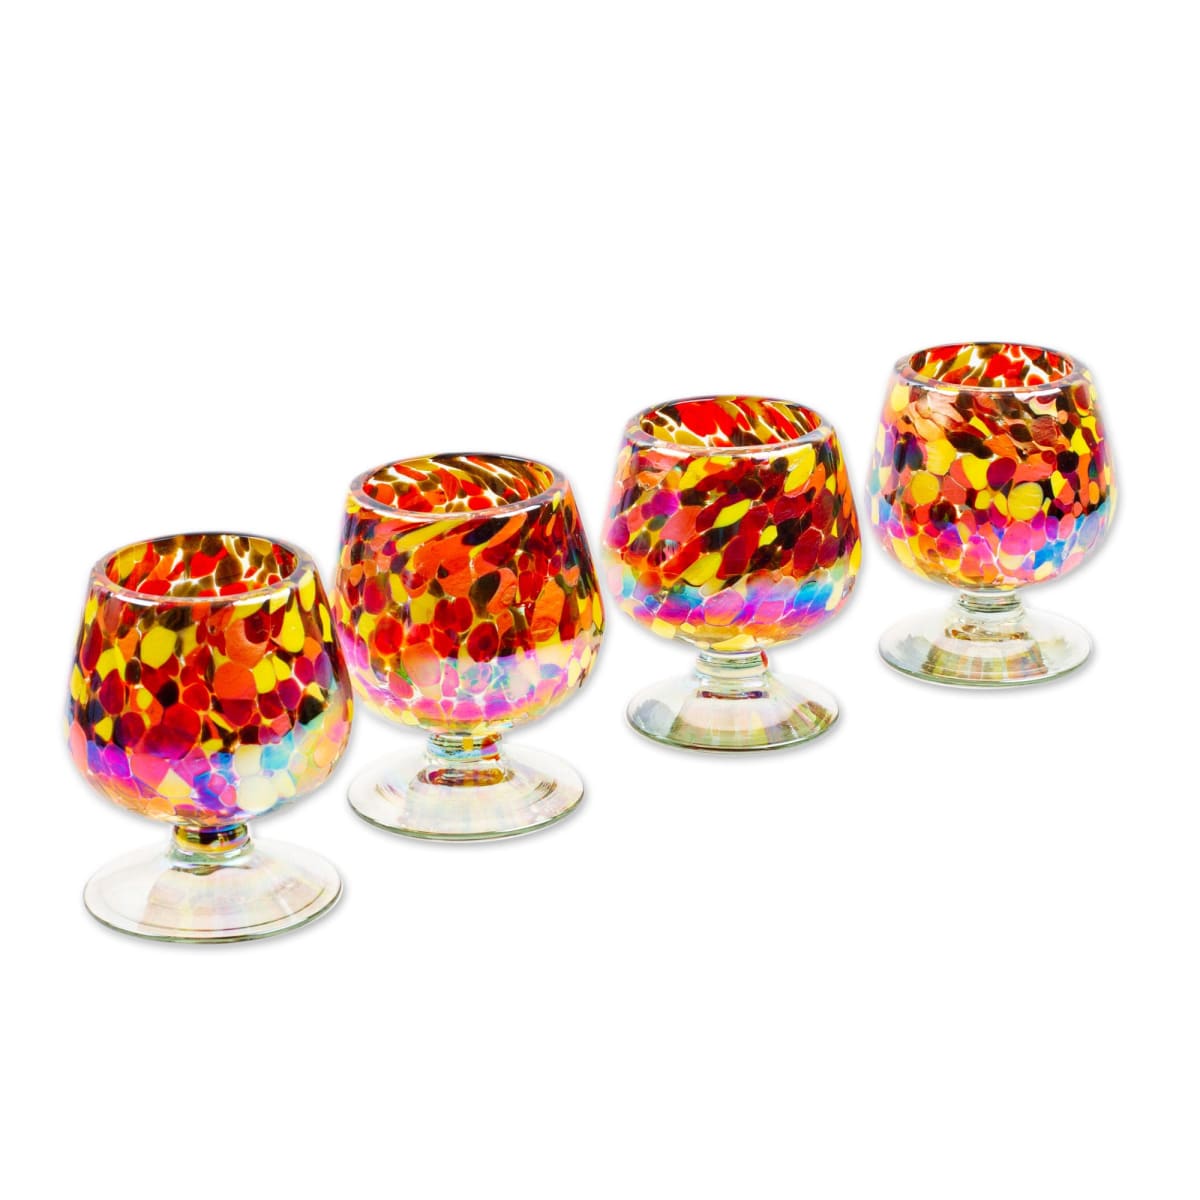 Set of 4 Eco-Friendly Red Handblown Wine Glasses, 'Elegance Enchantment